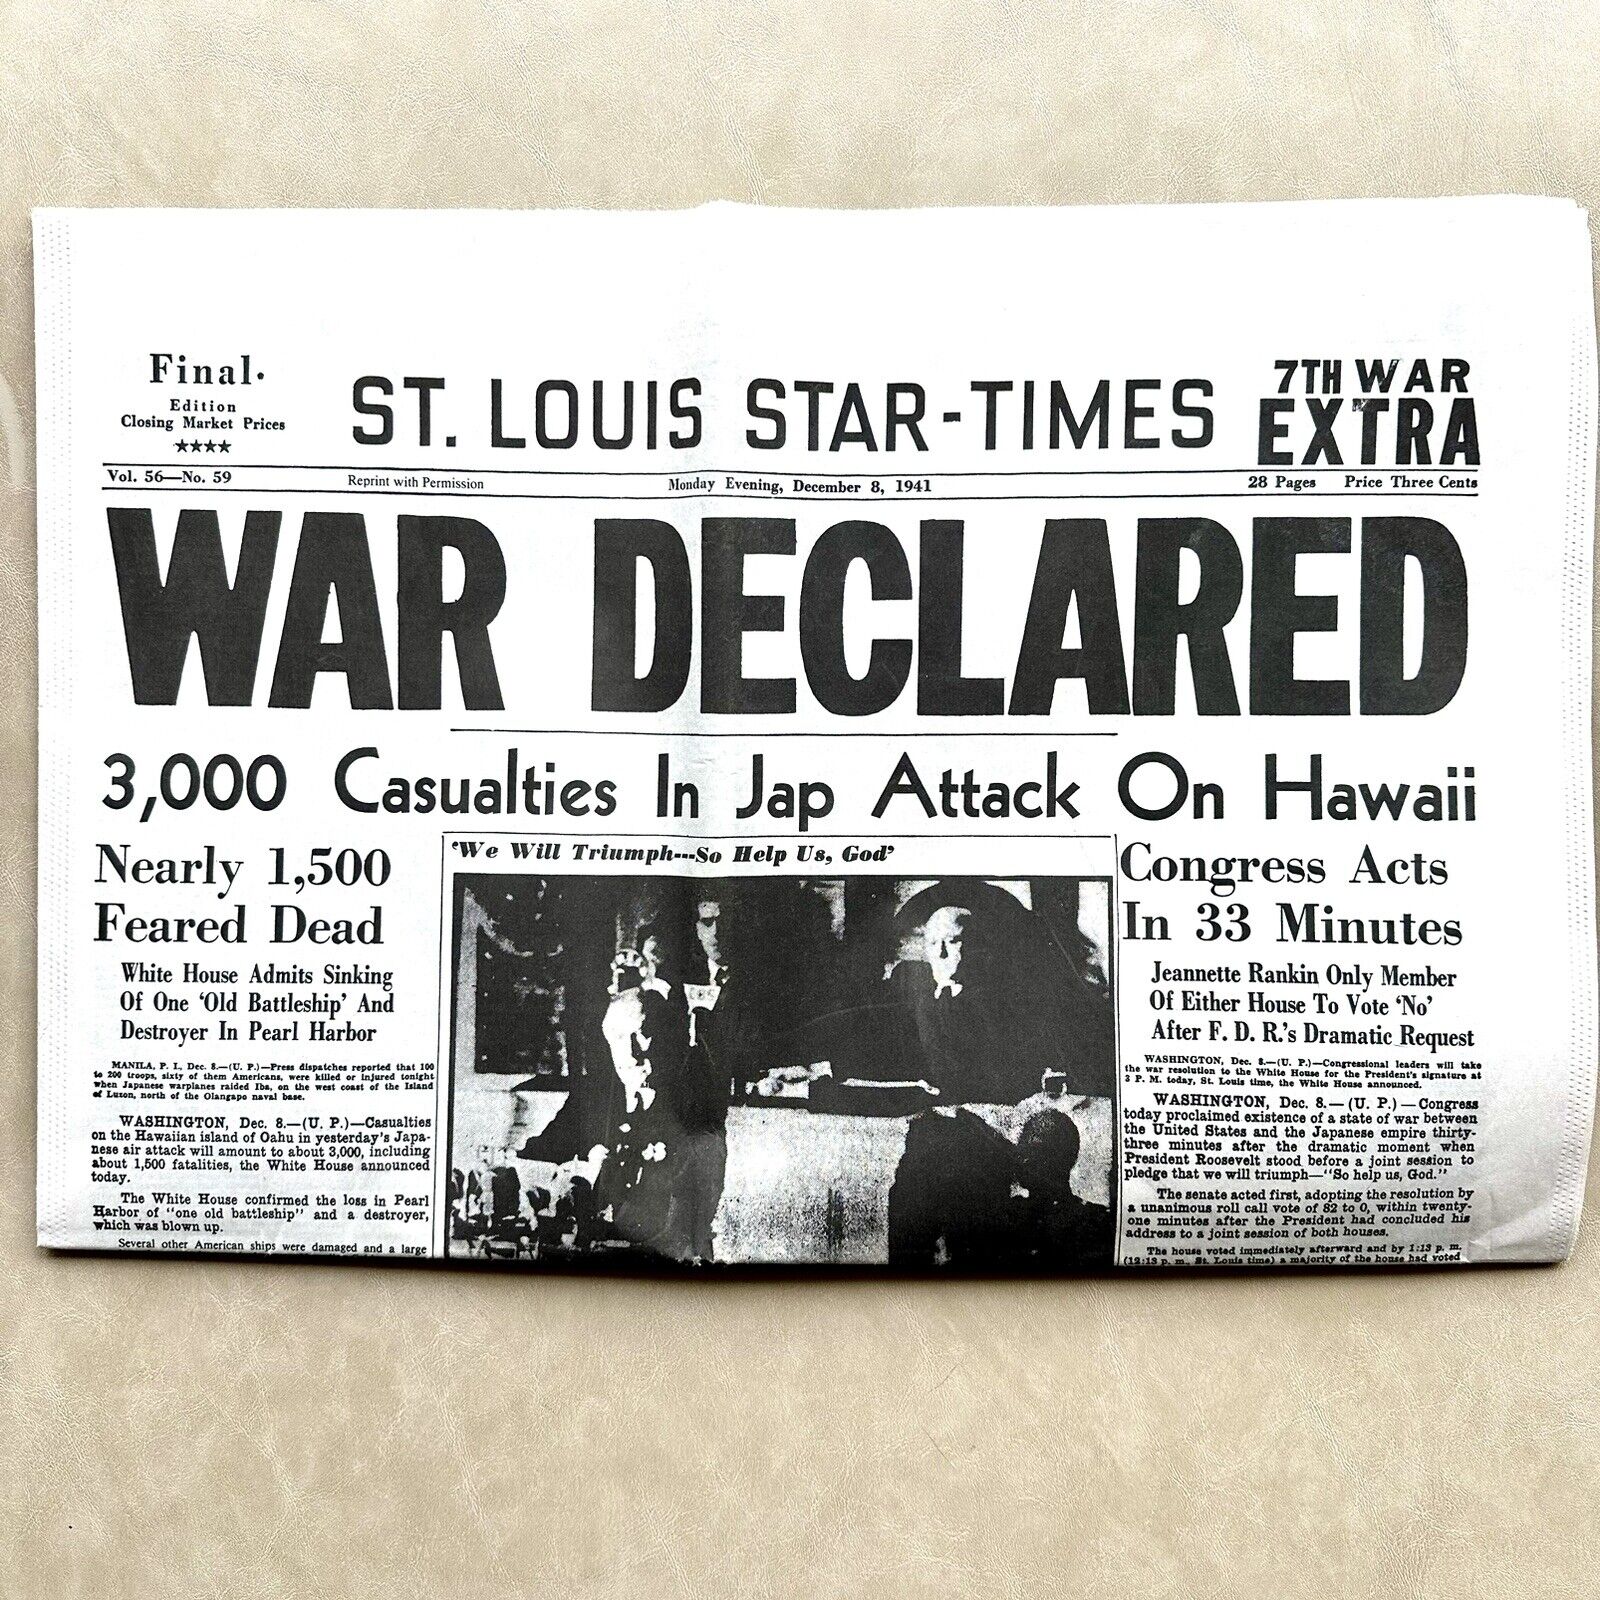 St. Louis Star-Times December 8, 1941 War Declared Edition